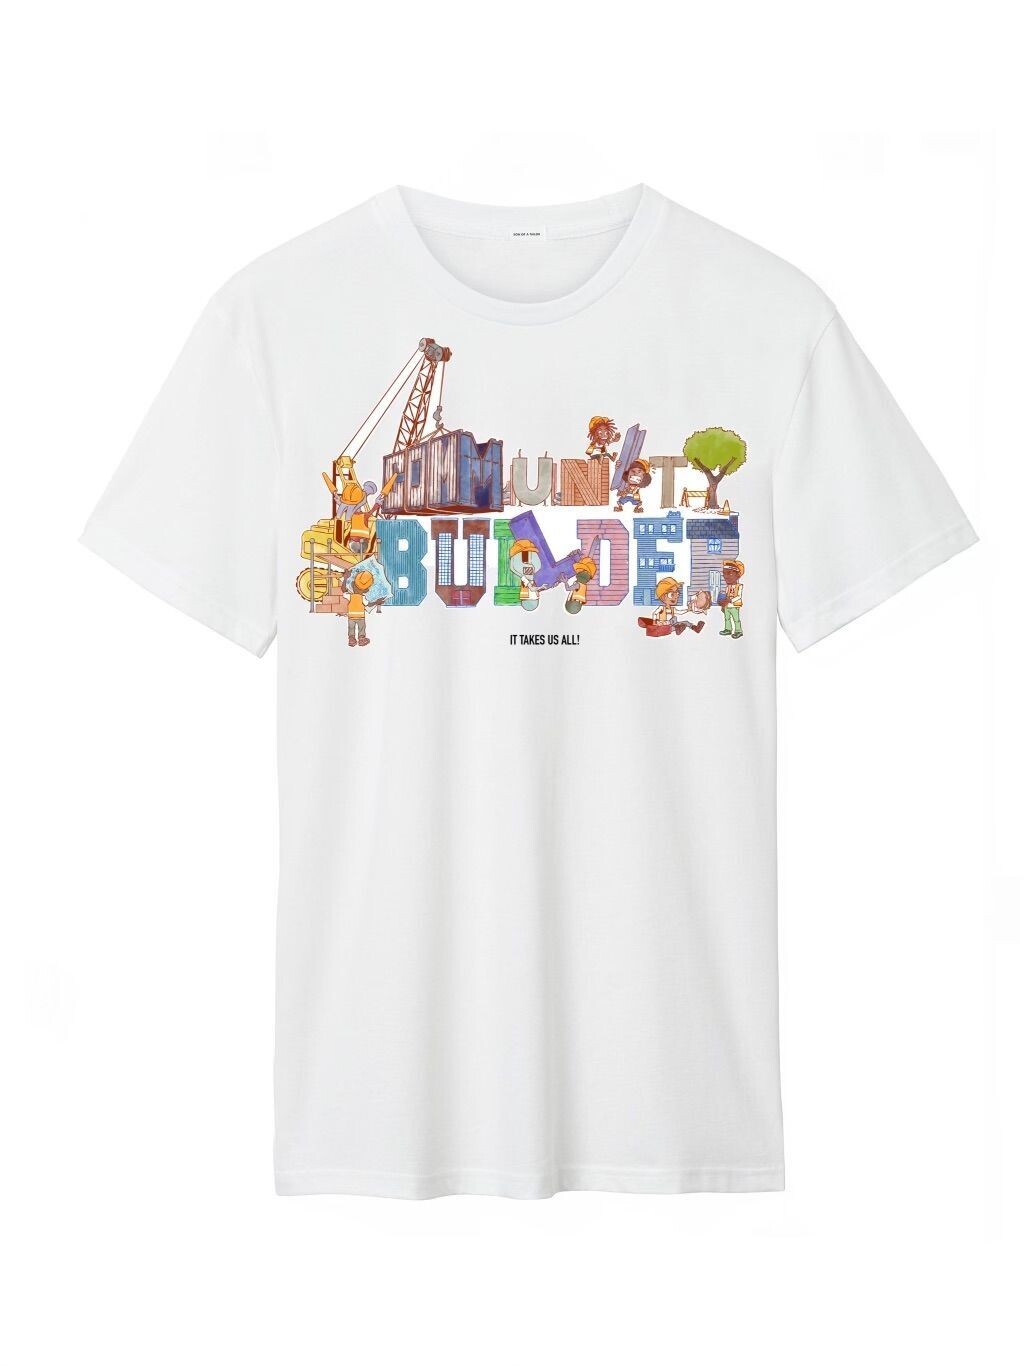 Community Builder T-Shirt